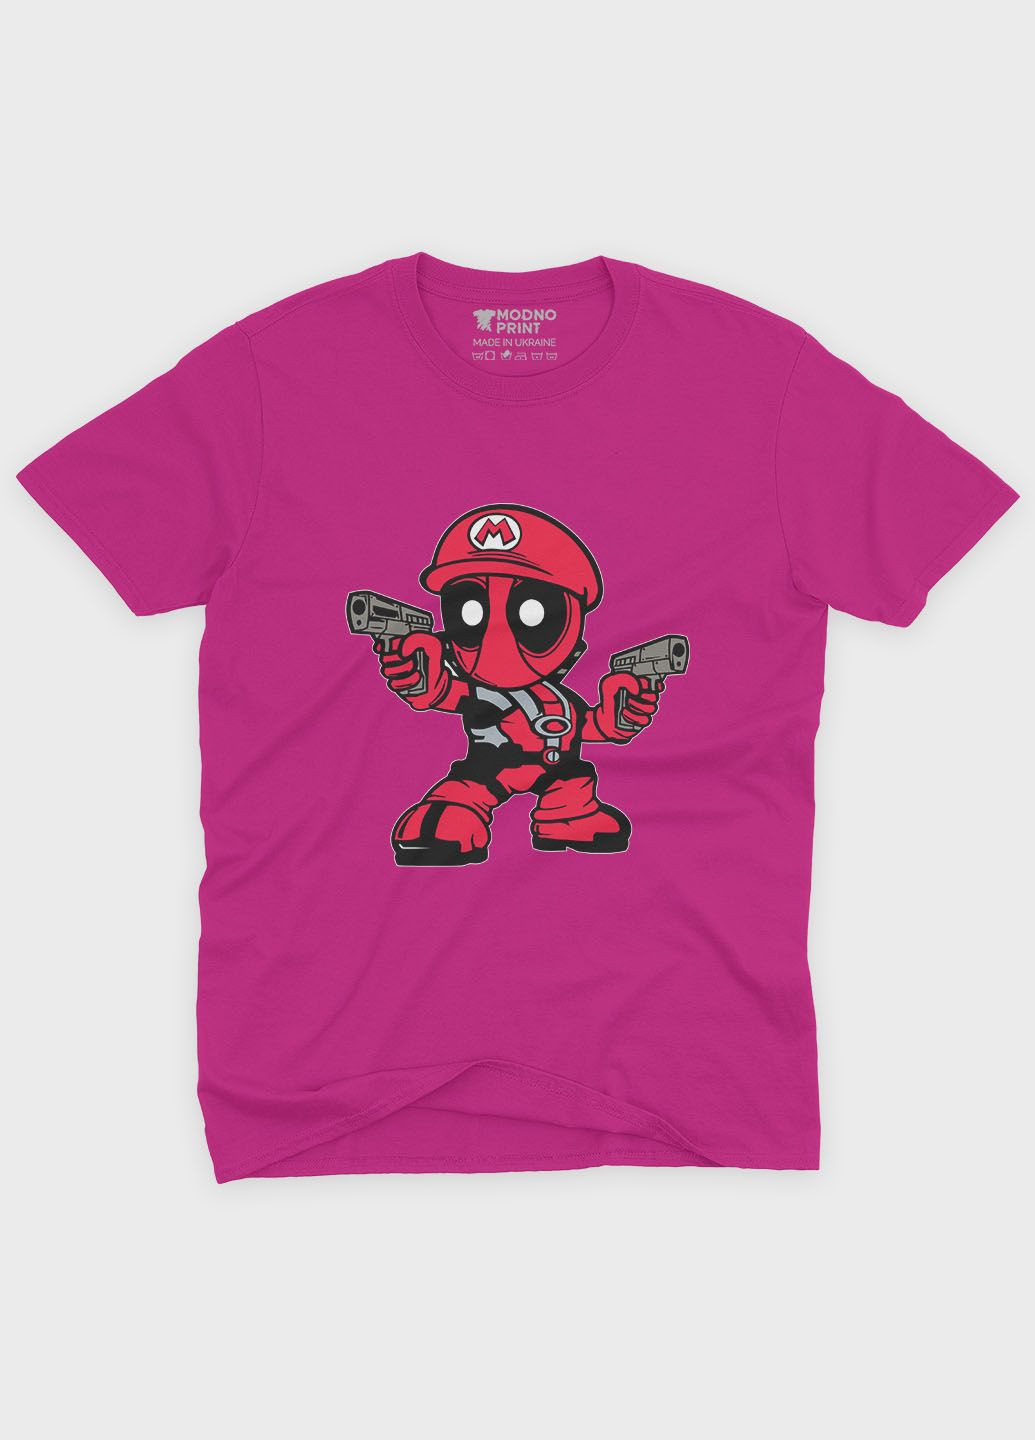 Розовая демисезонная футболка для мальчика с принтом антигероя - дедпул (ts001-1-fuxj-006-015-021-b) Modno